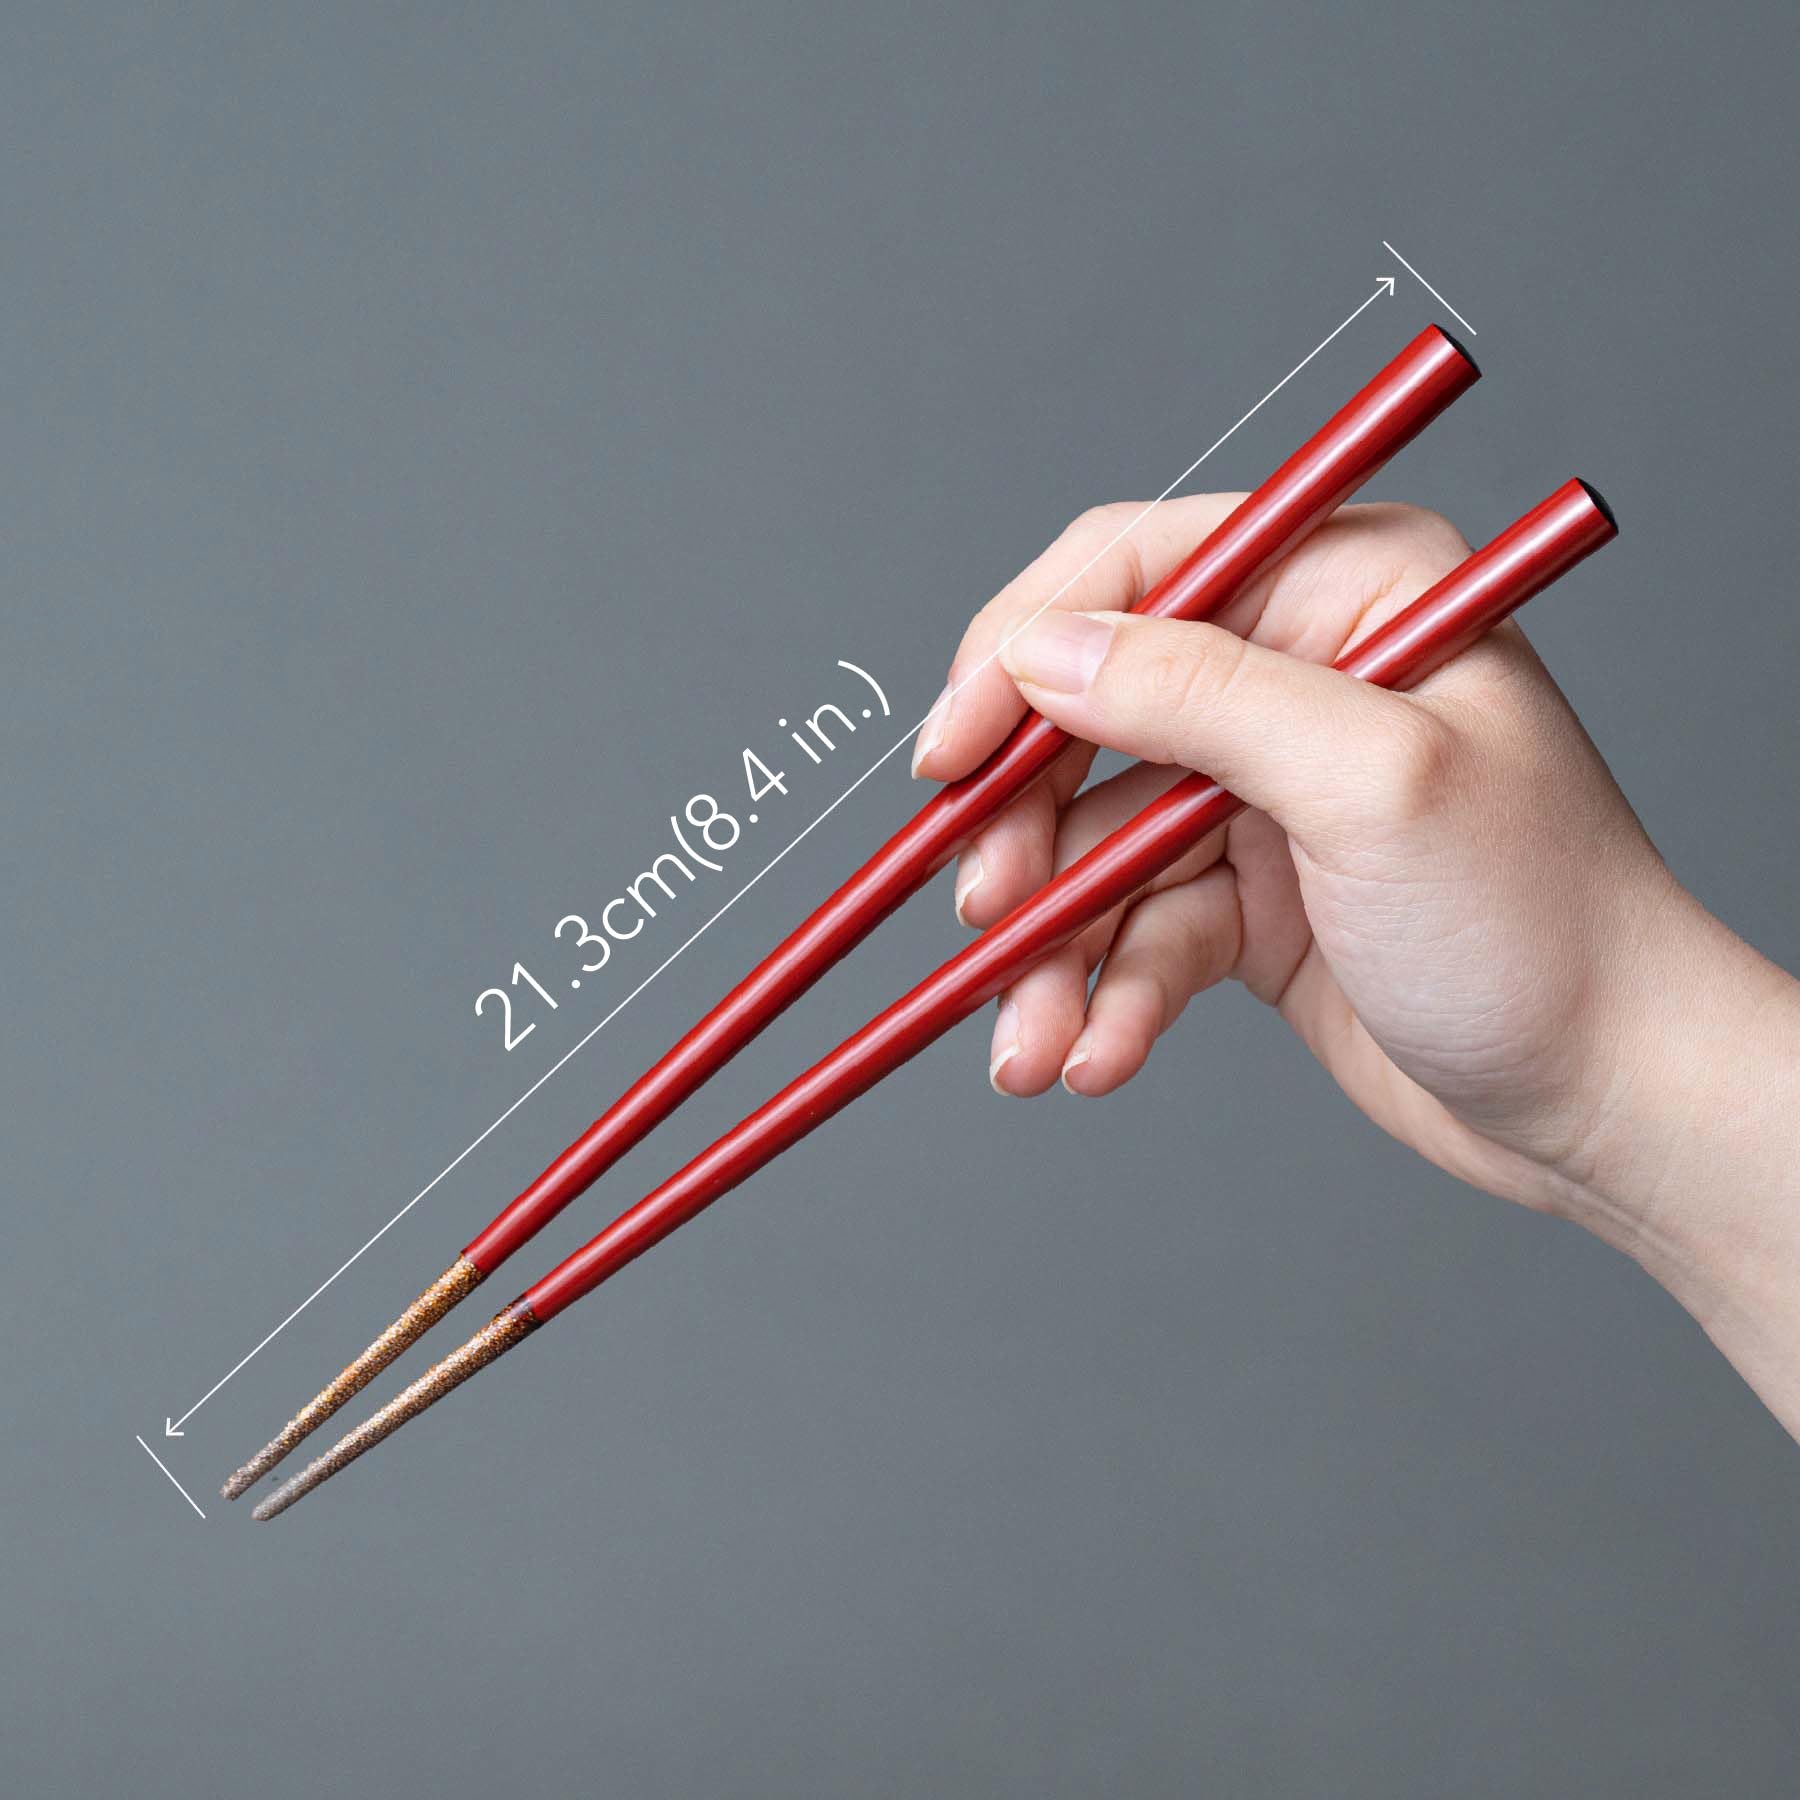 Kasyou Studio URUSHI KENKO chopsticks ( RED 8.4 Inch/21.3 cm) made in japan (Noto Hiba natural wood) luxury chopsticks reusable japanese style gift set palillos chinos cute